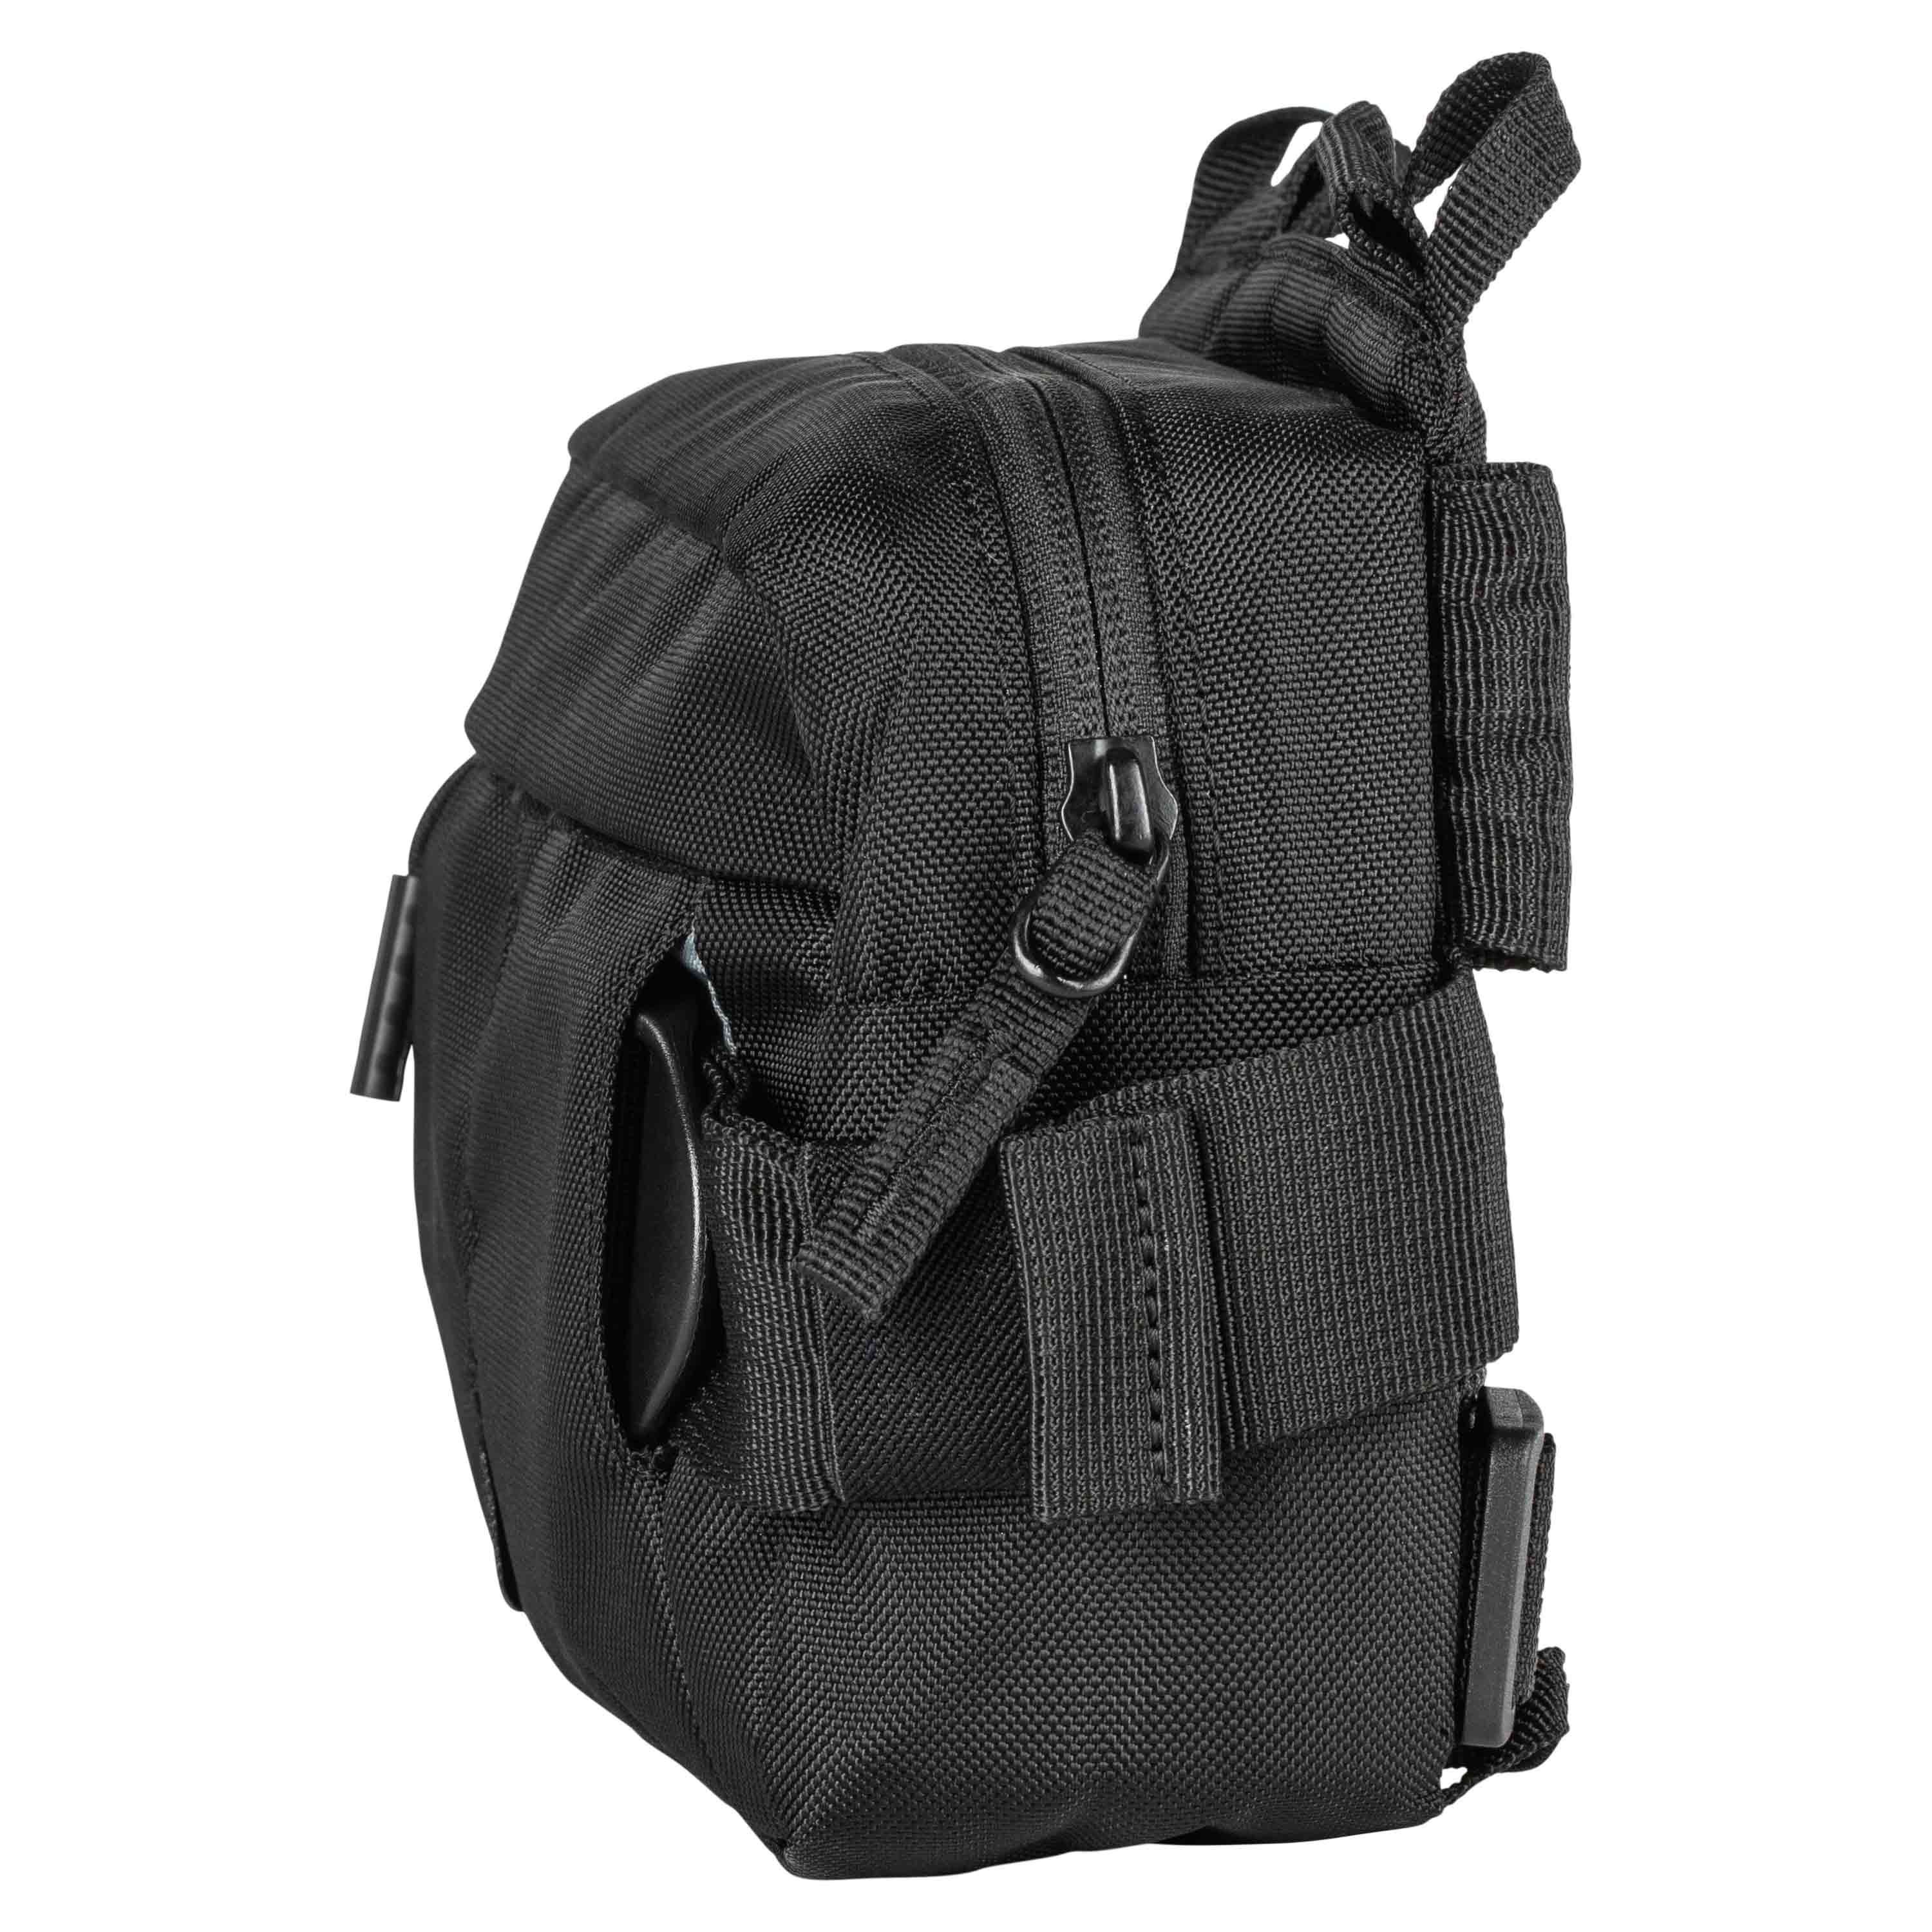 Comprar 5.11 Bolsa LV6 Bag negra en ASMC